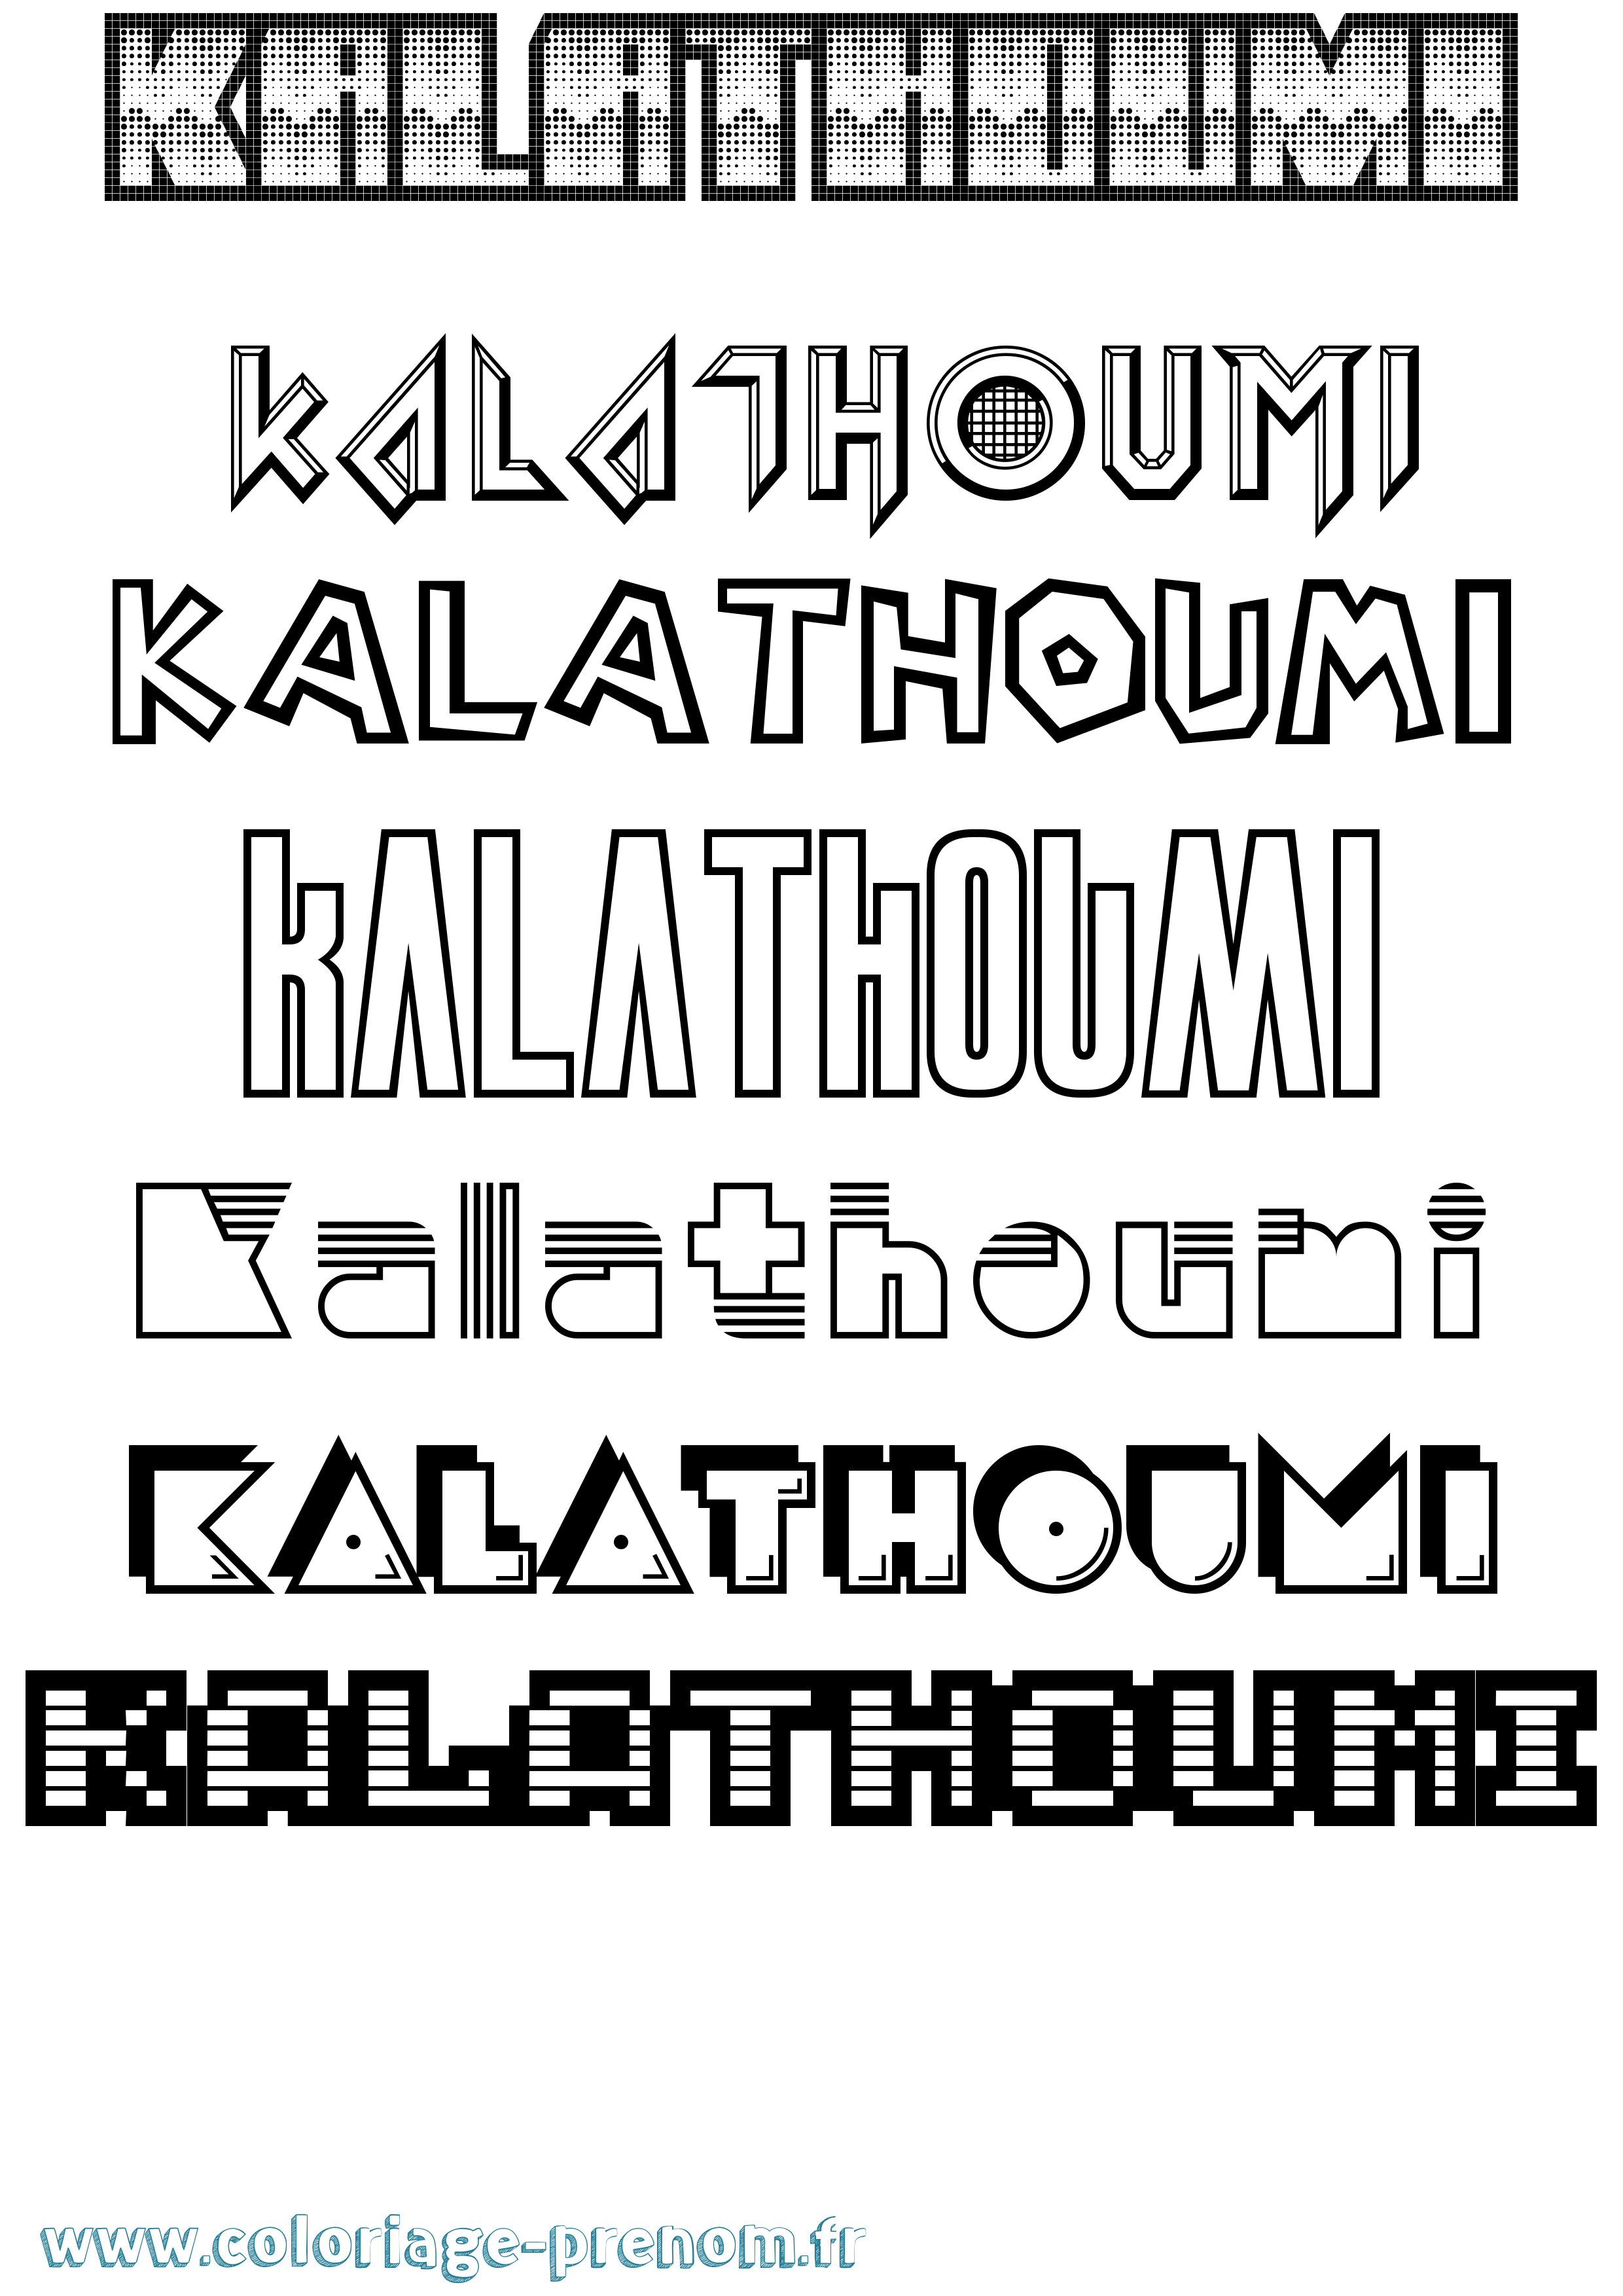 Coloriage prénom Kalathoumi Jeux Vidéos